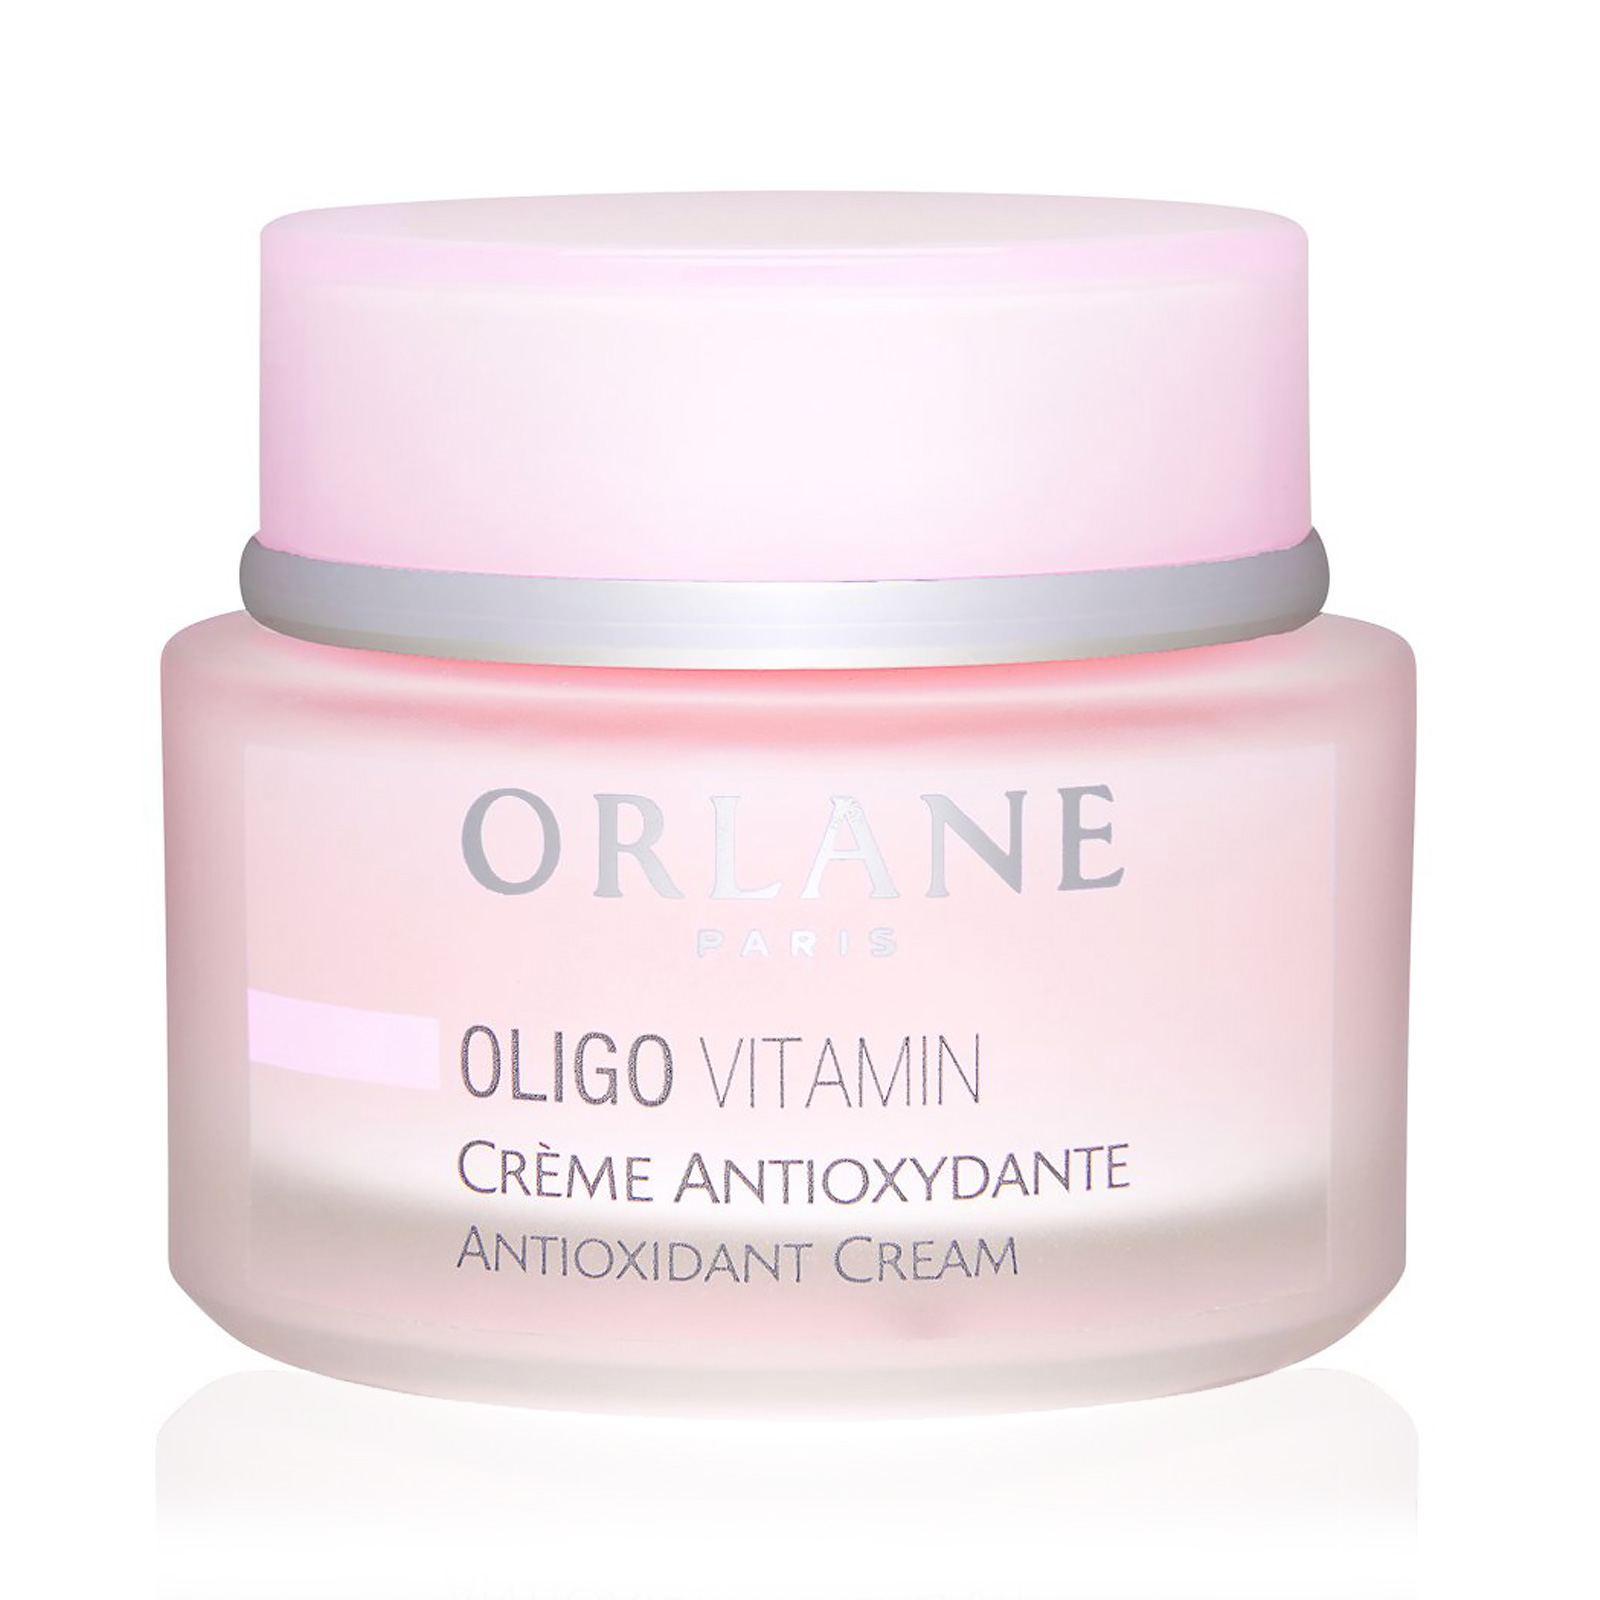 Oligo Vitamin Antioxidant Cream